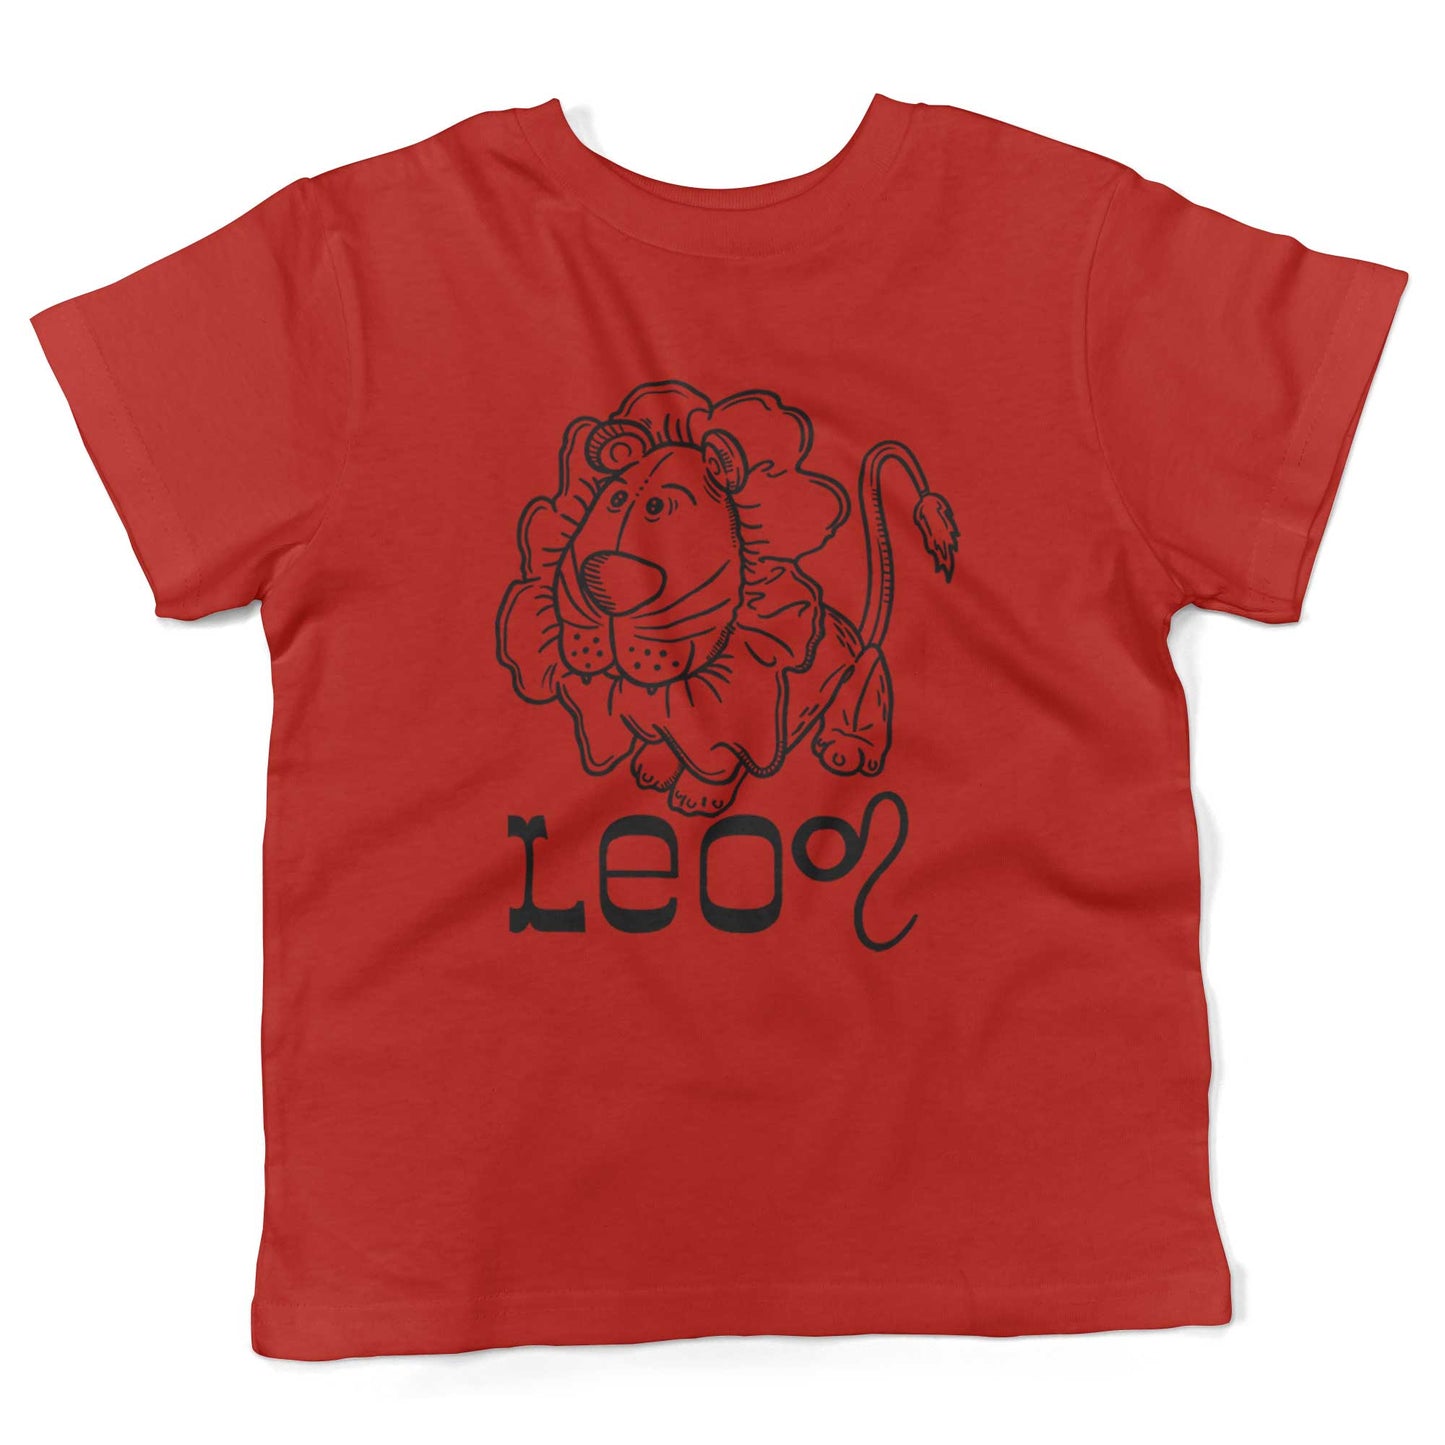 Leo Cotton Toddler Shirt